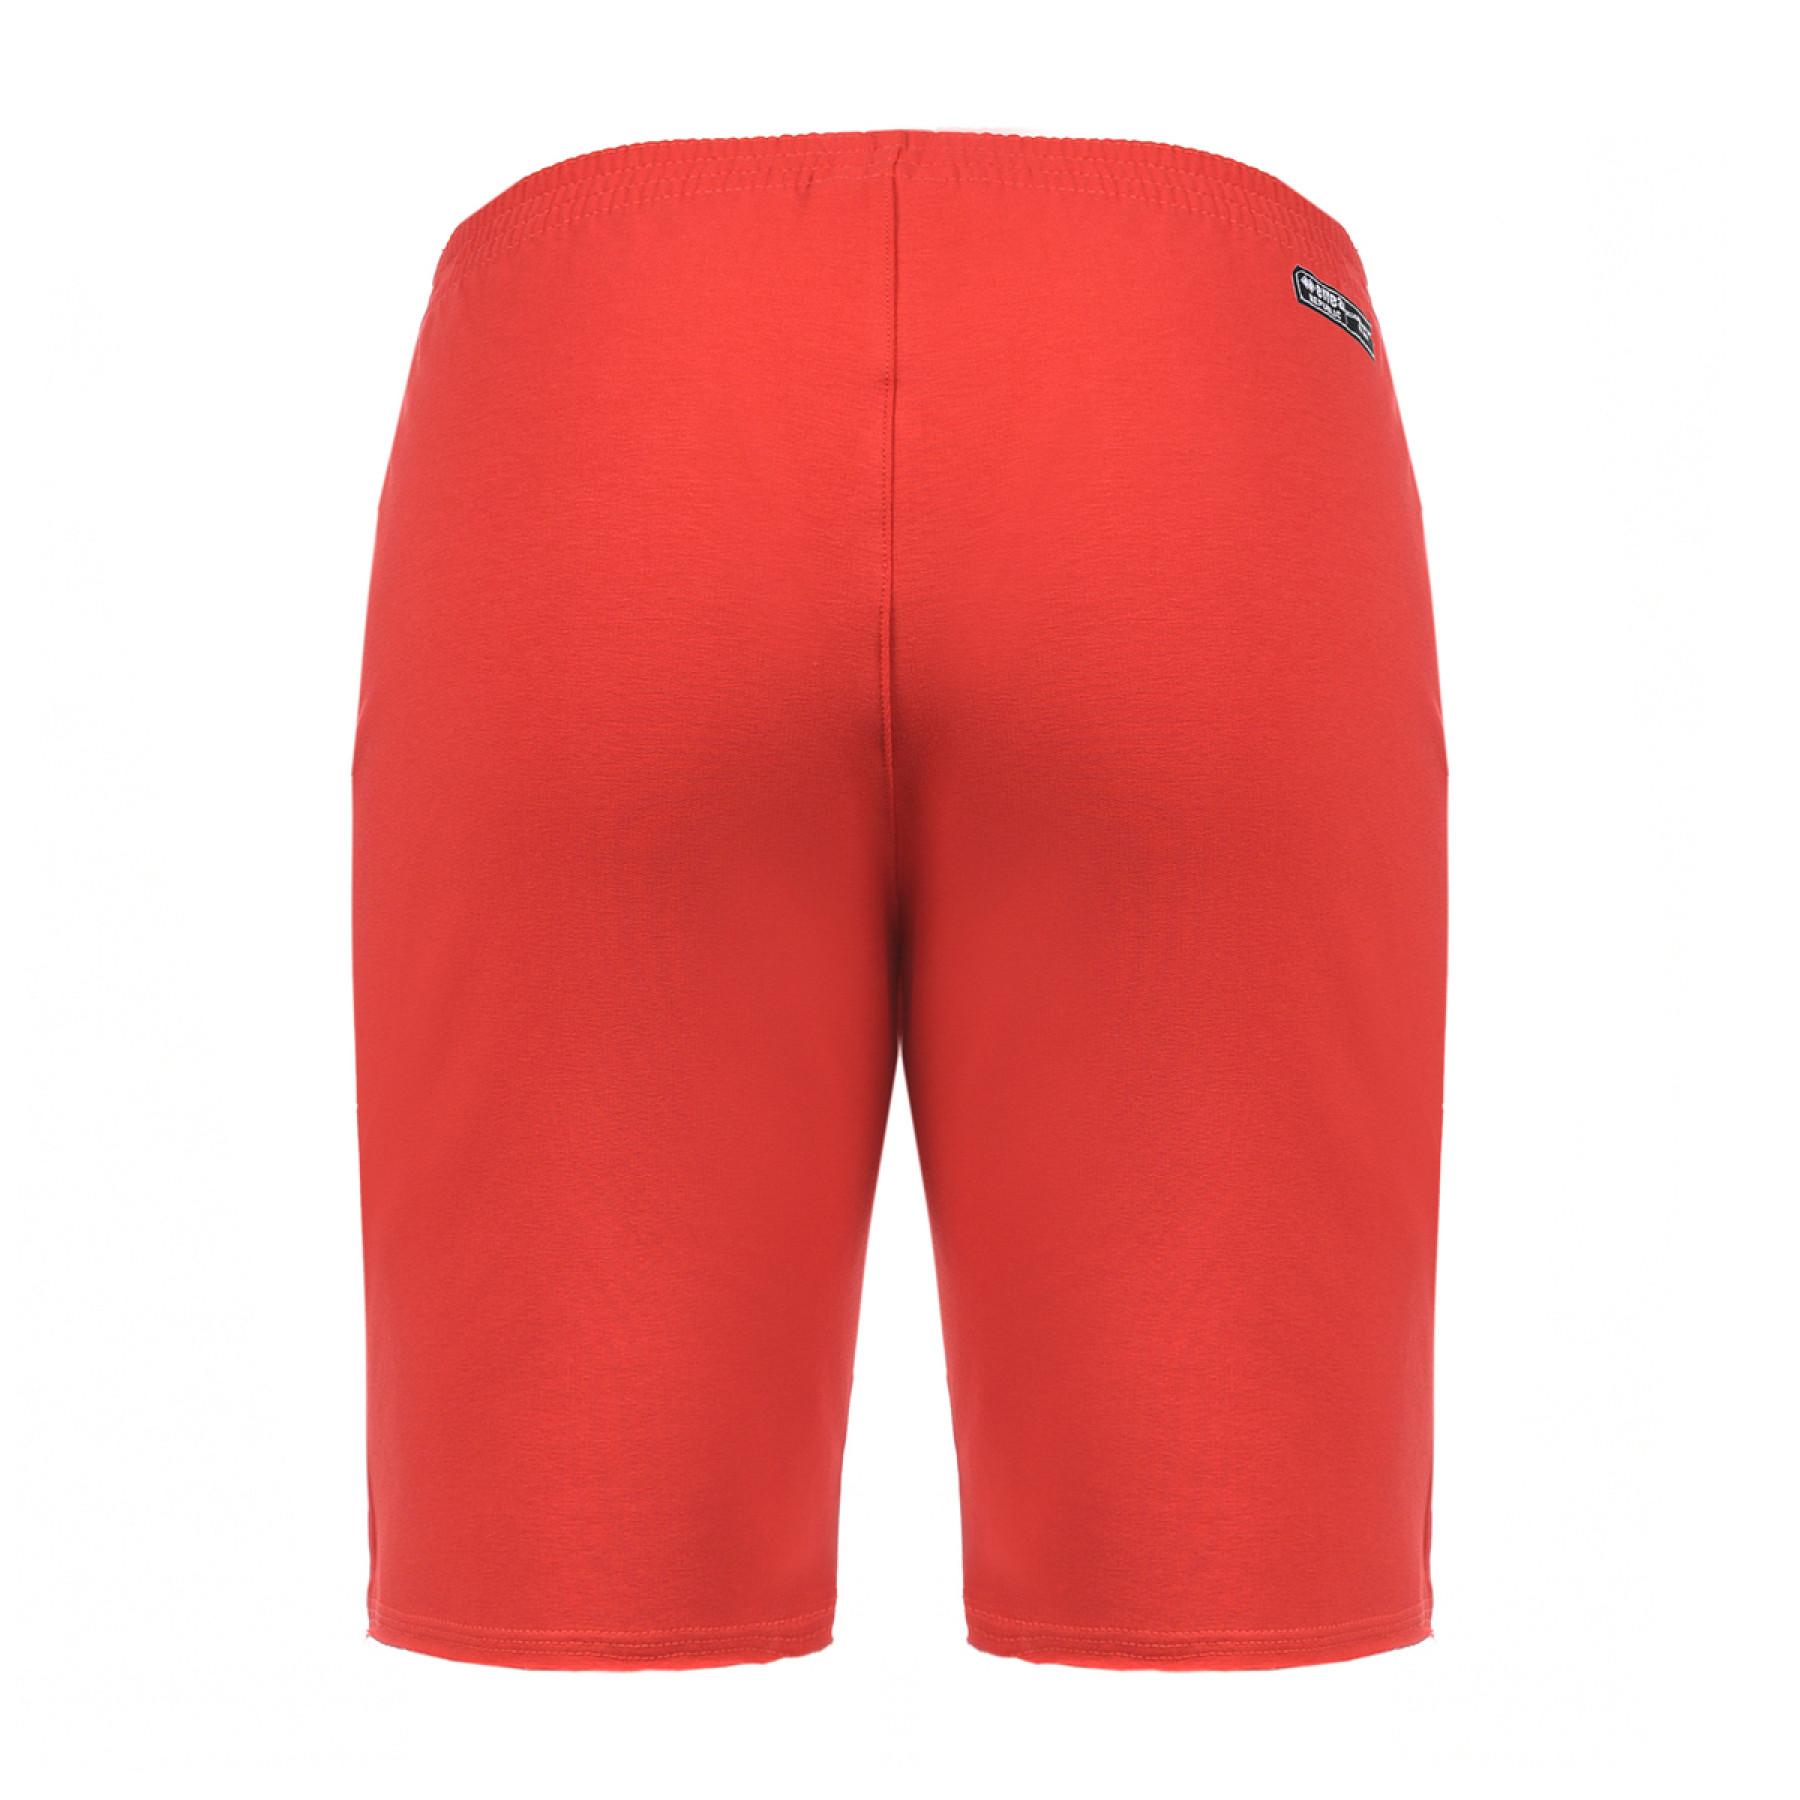 Damen-Bermuda-Shorts Errea essential side